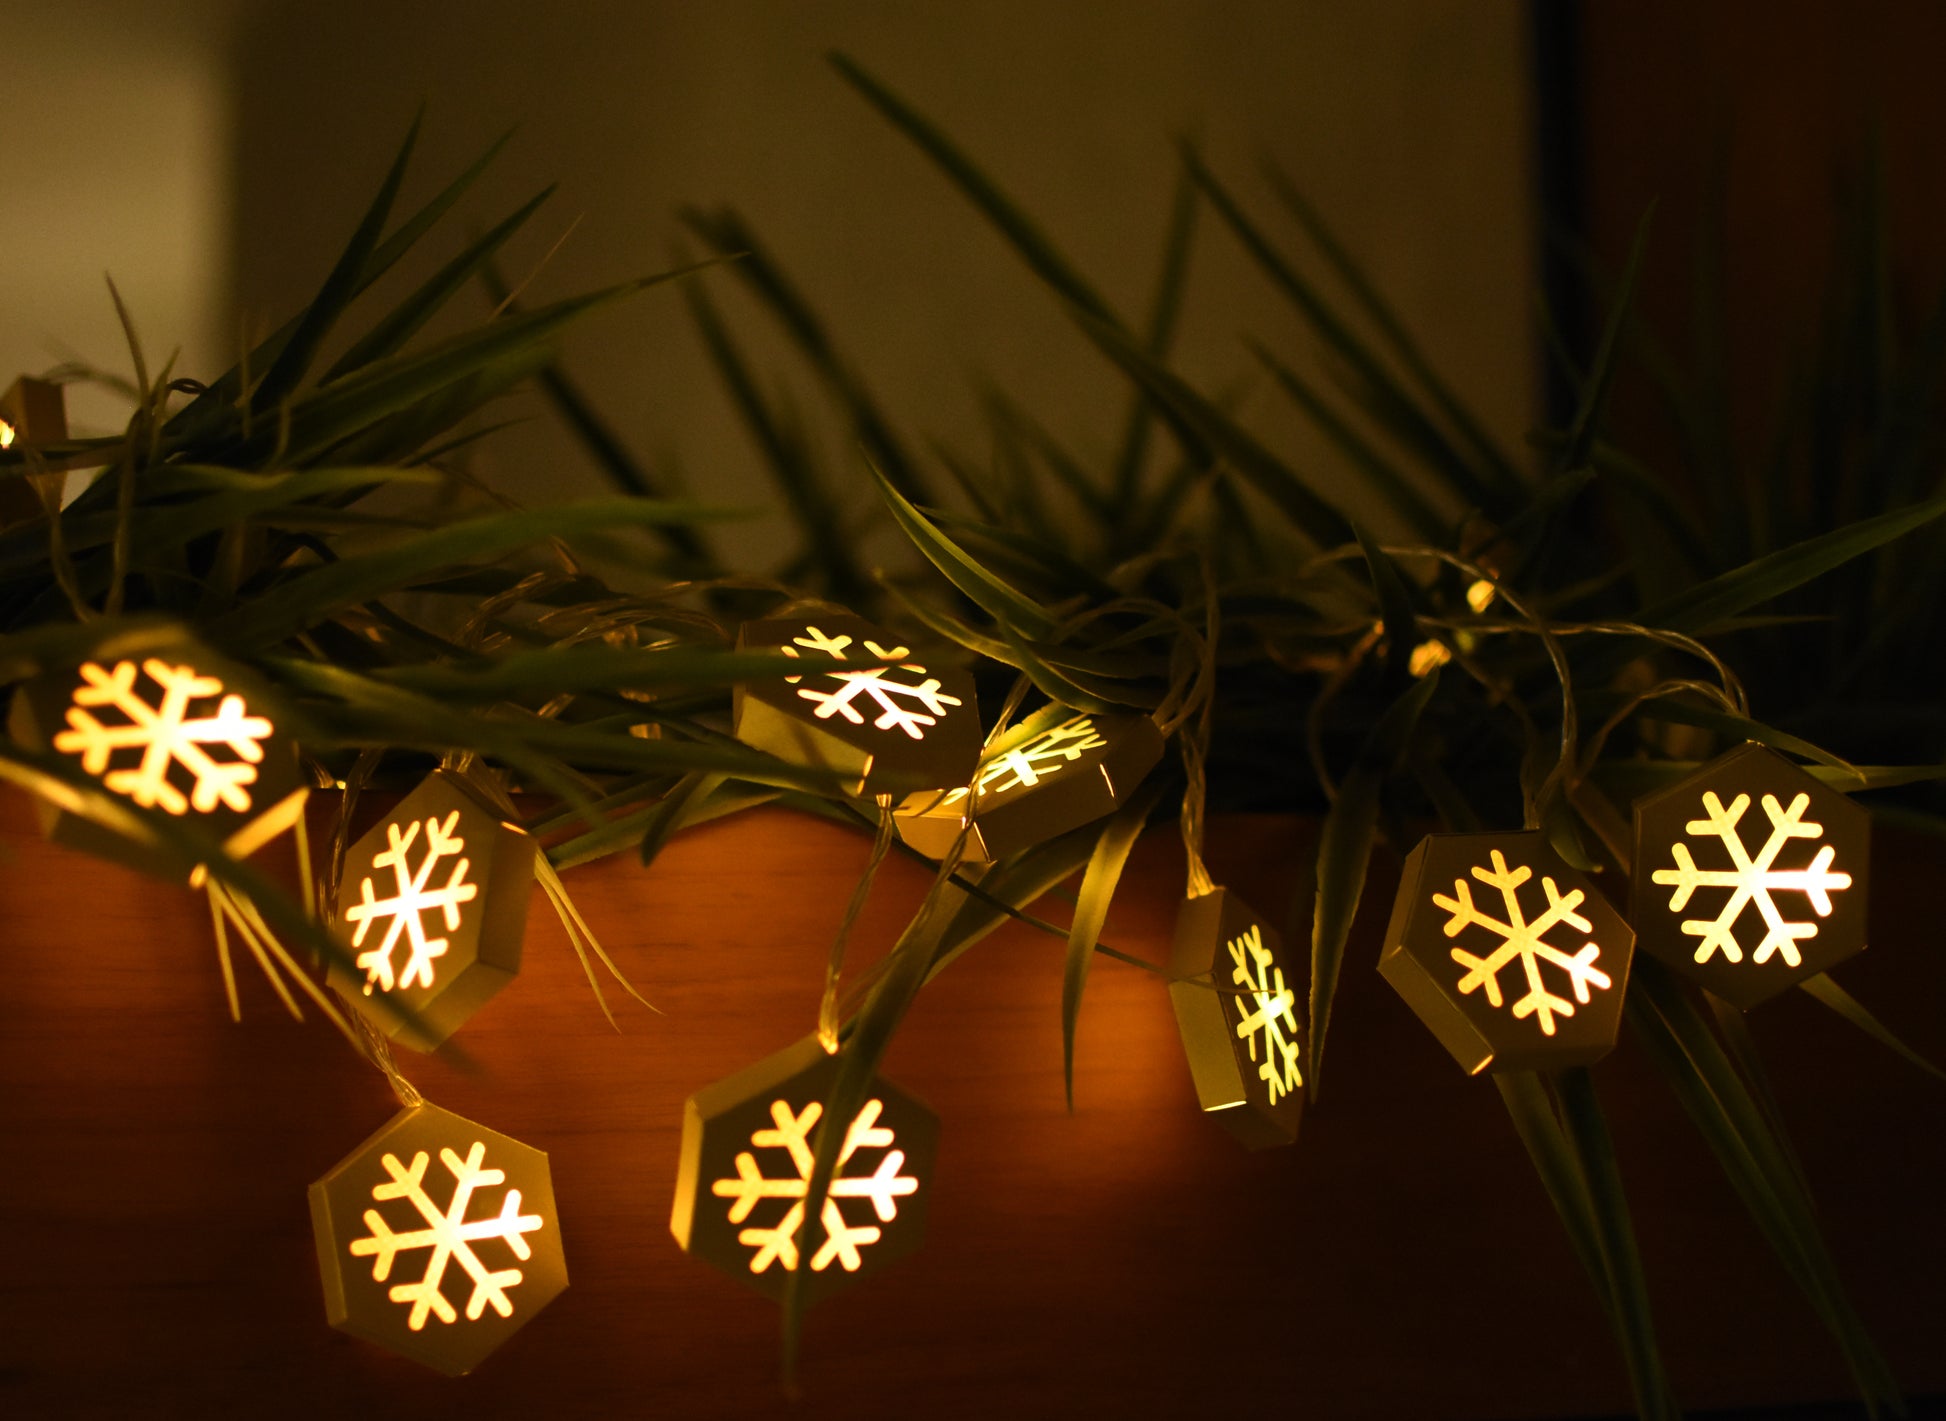 Cute Christmas string lights for decor